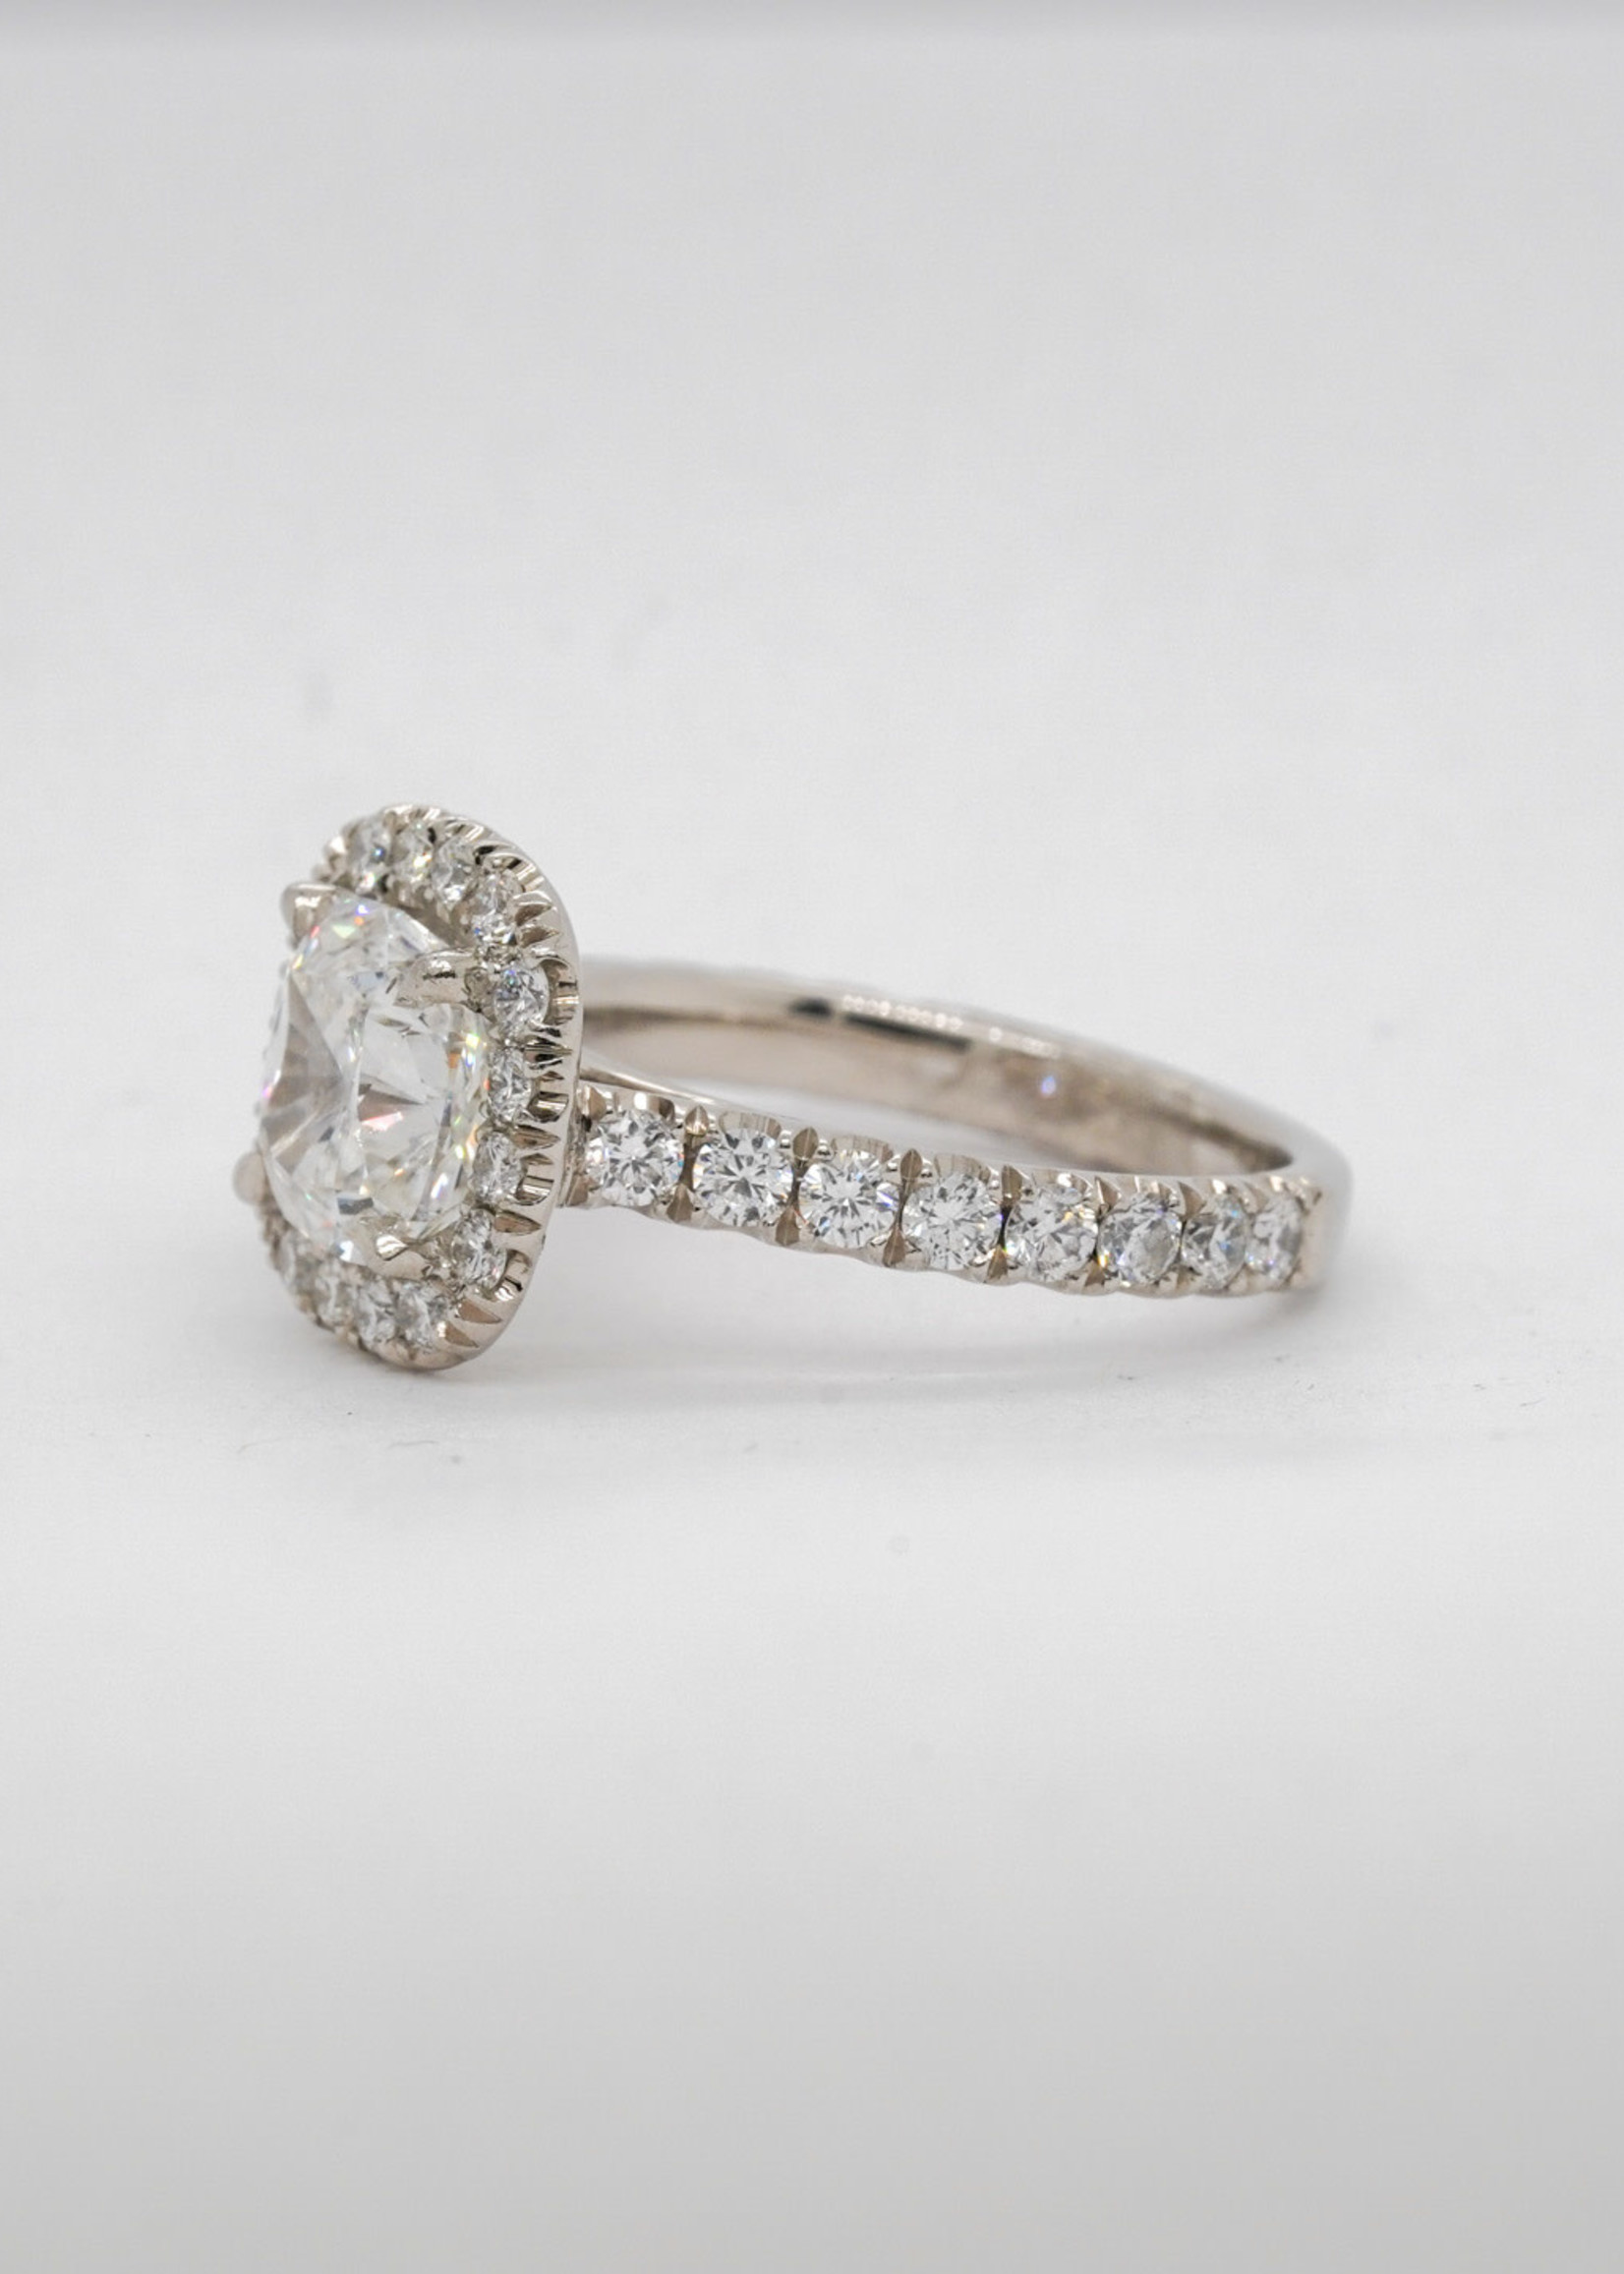 Platinum 5.92g 2.93ctw (2.01ctr) F/SI1 GIA Cushion Diamond Halo Engagement Ring (size 5)